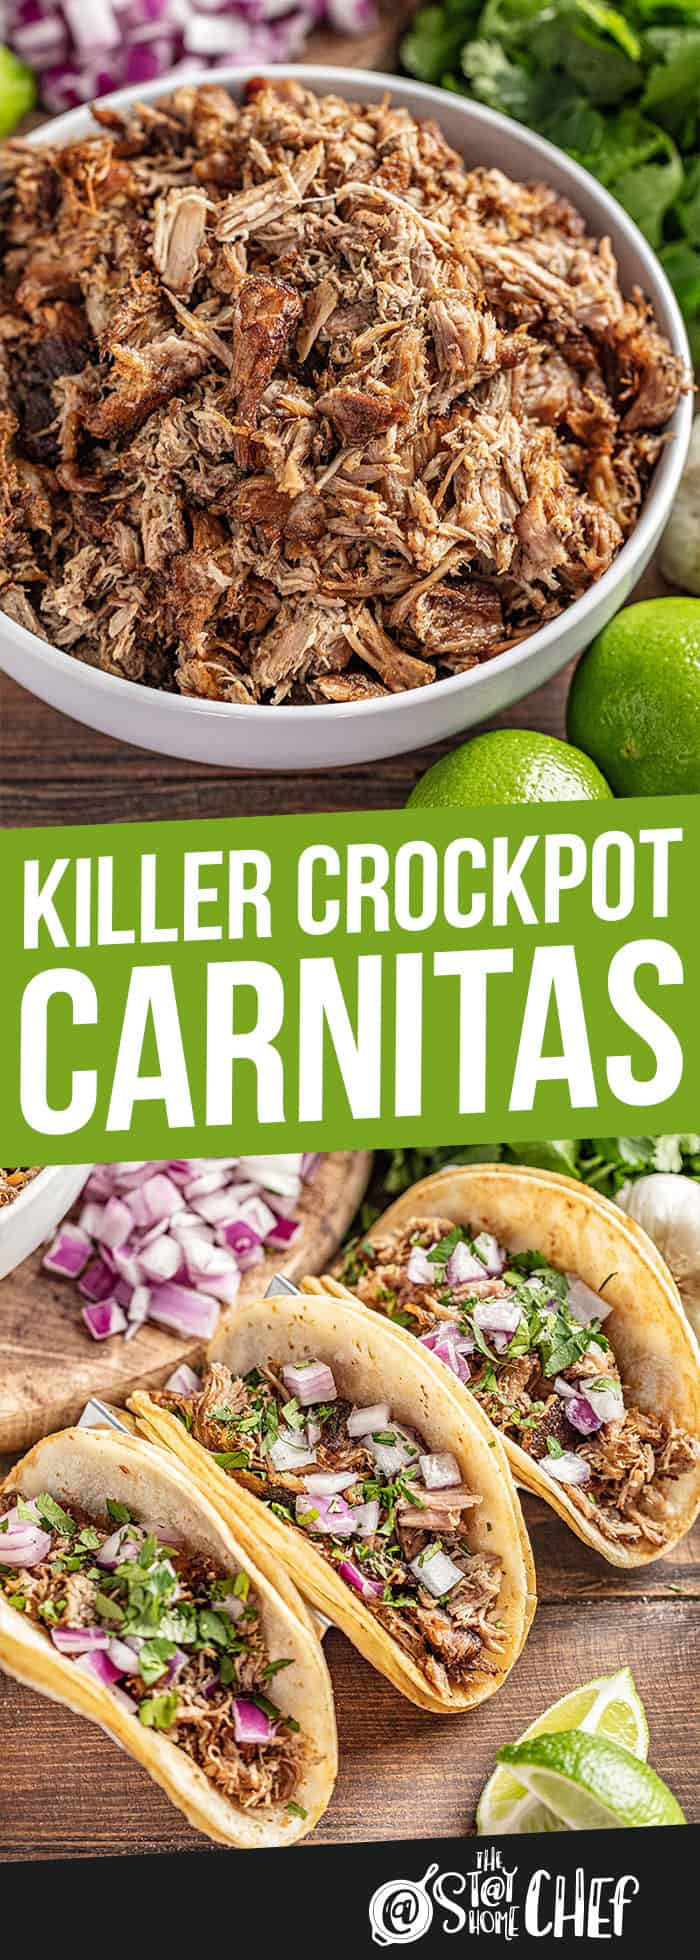 Killer Crockpot Carnitas (Slow Cooker)